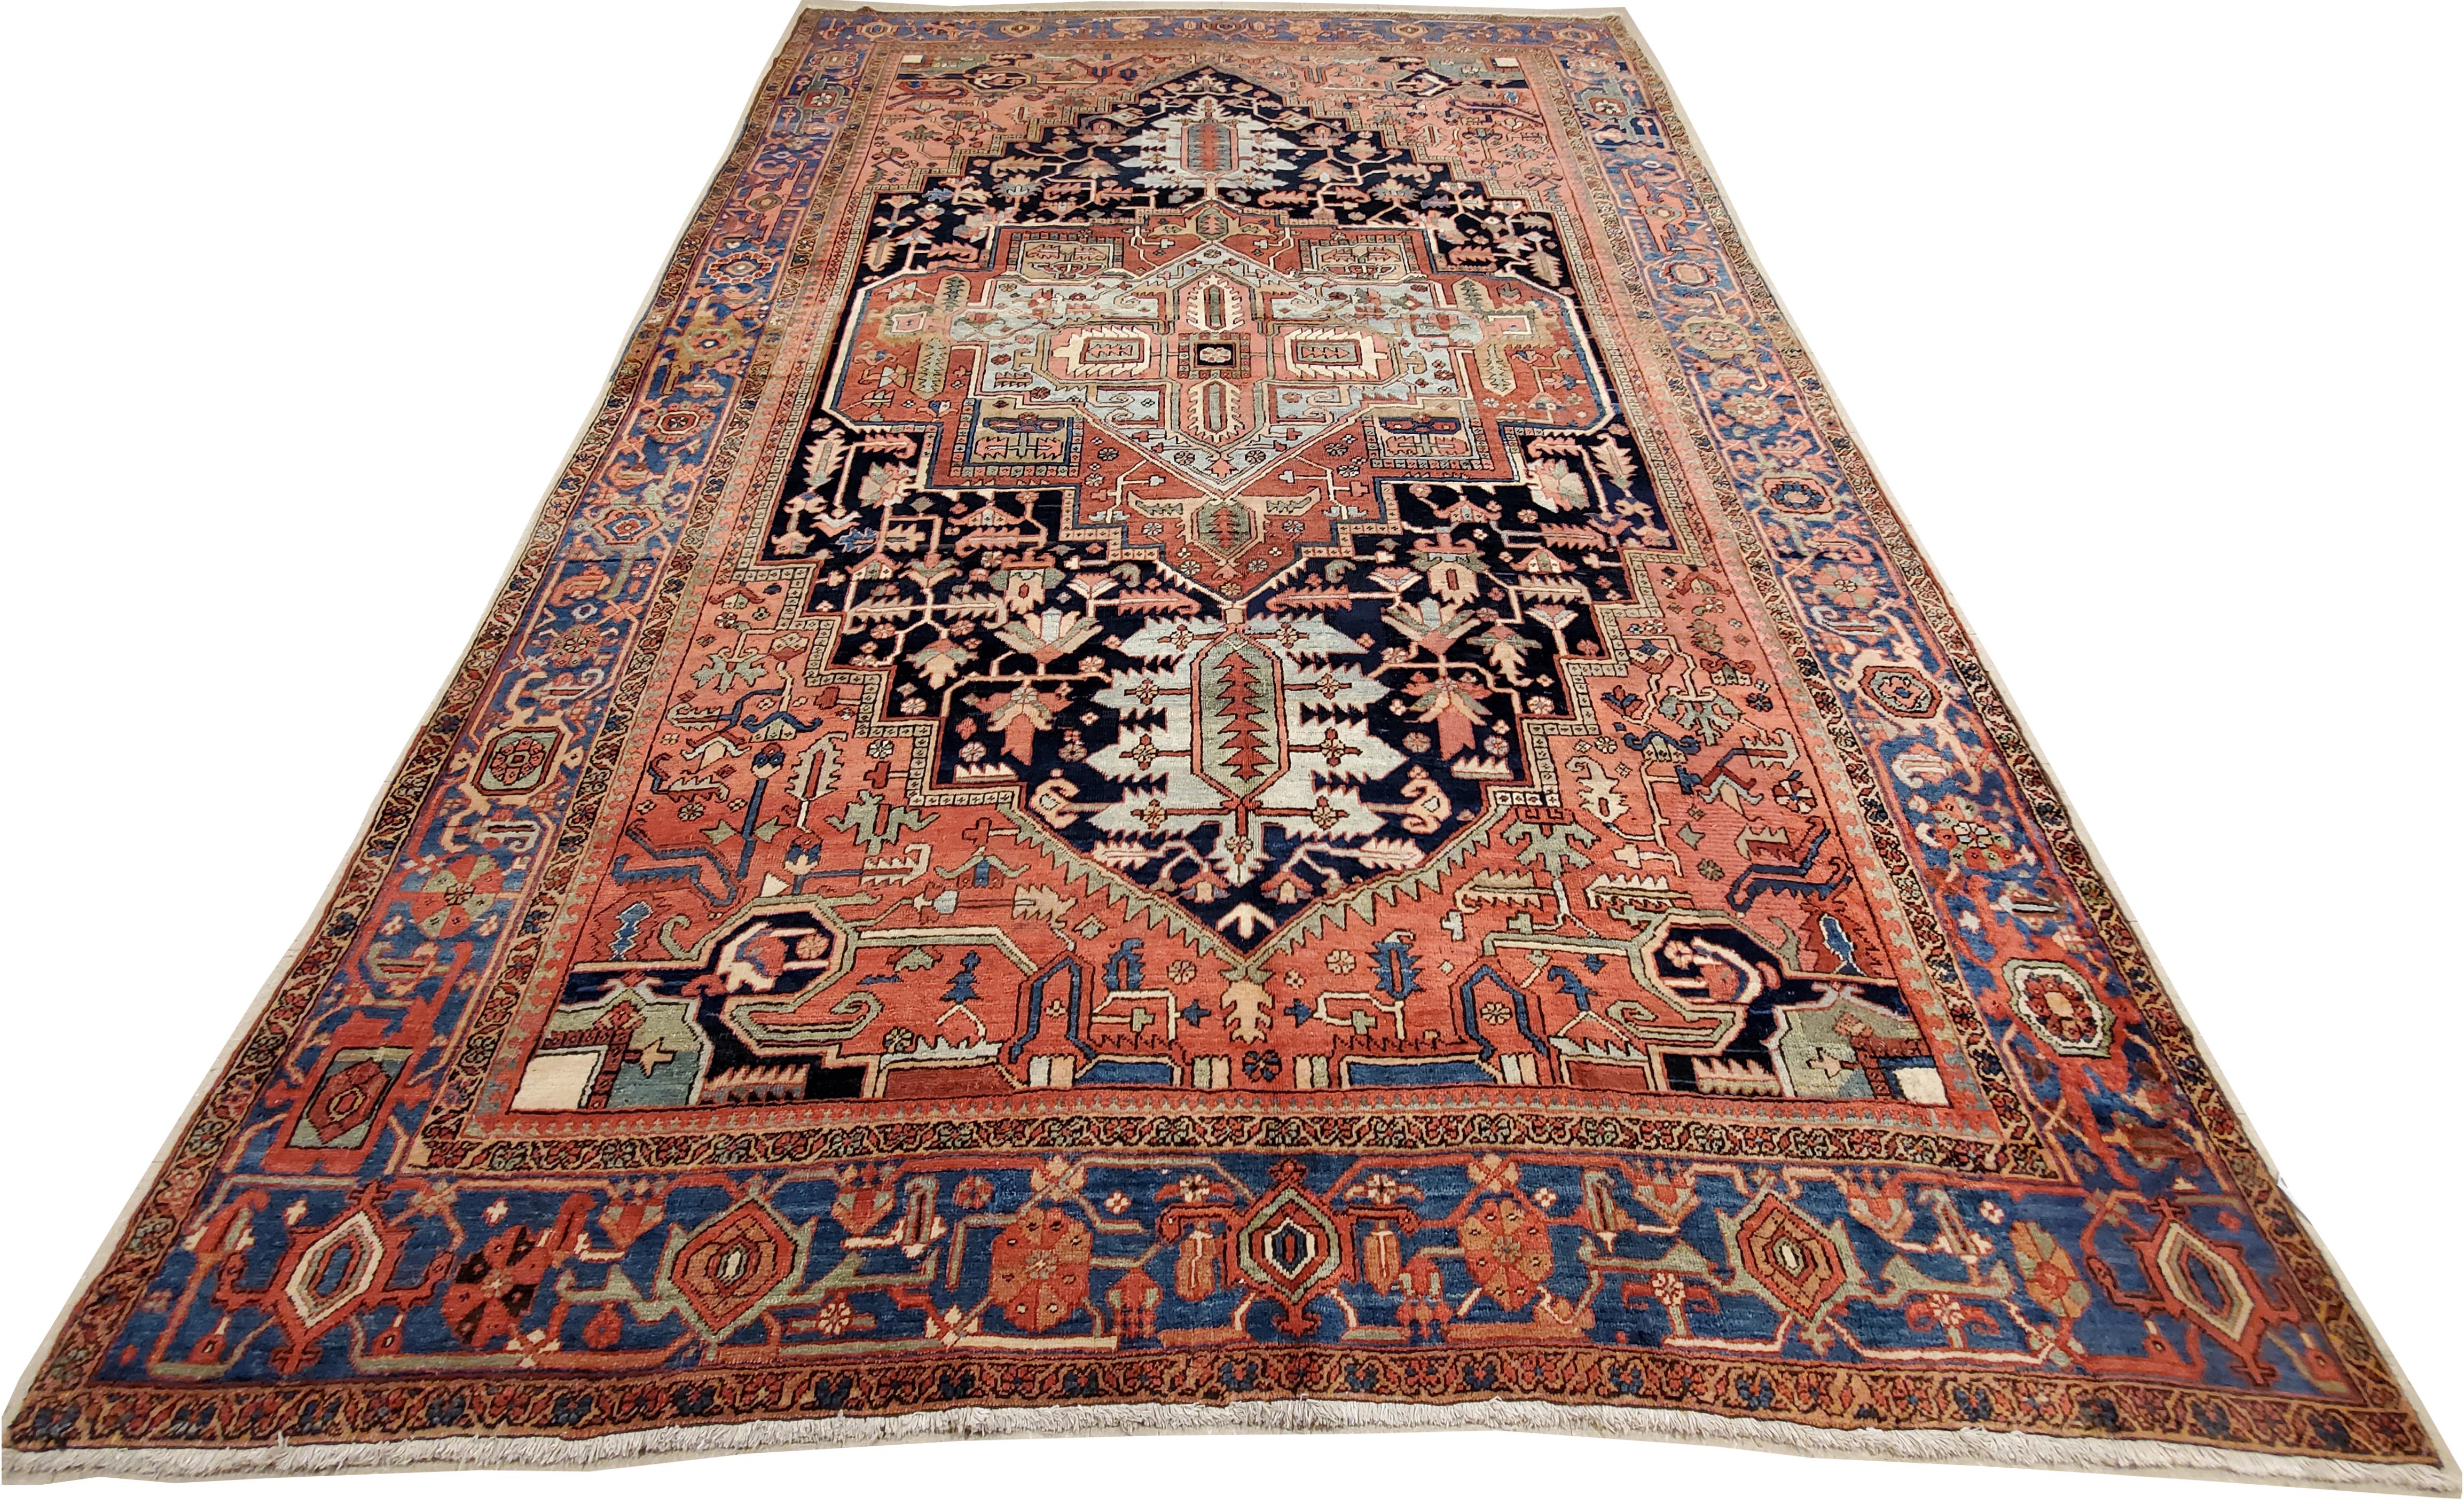 Antique Persian Heriz Carpet Handmade Wool Oriental Rug, Rust, Navy, Light Blue For Sale 5